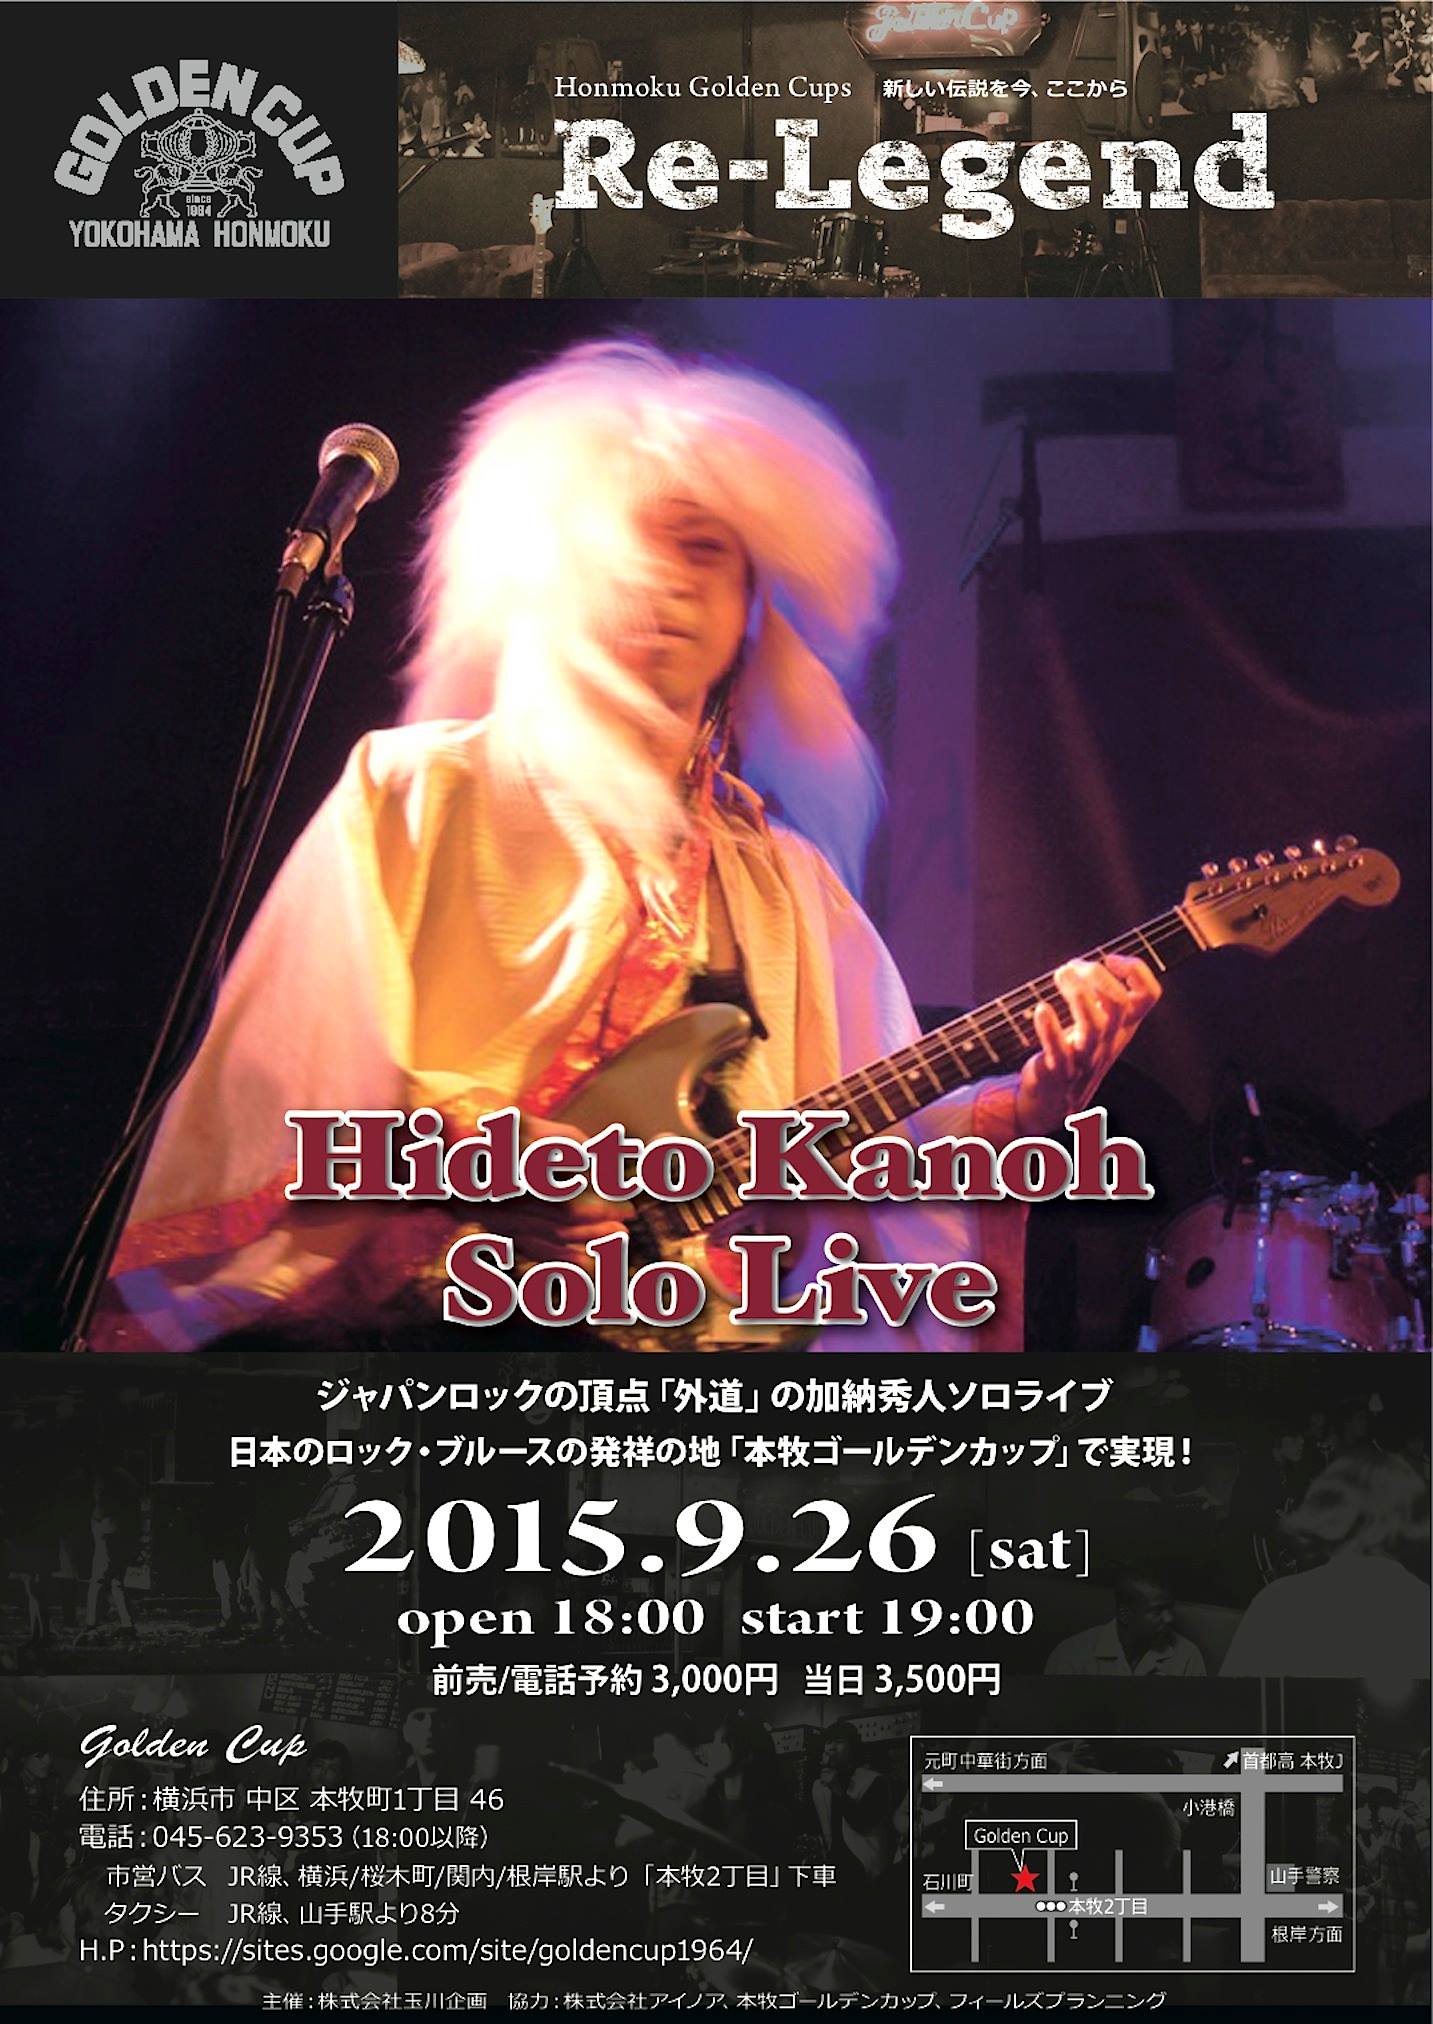 Hideto Kanoh Solo Live